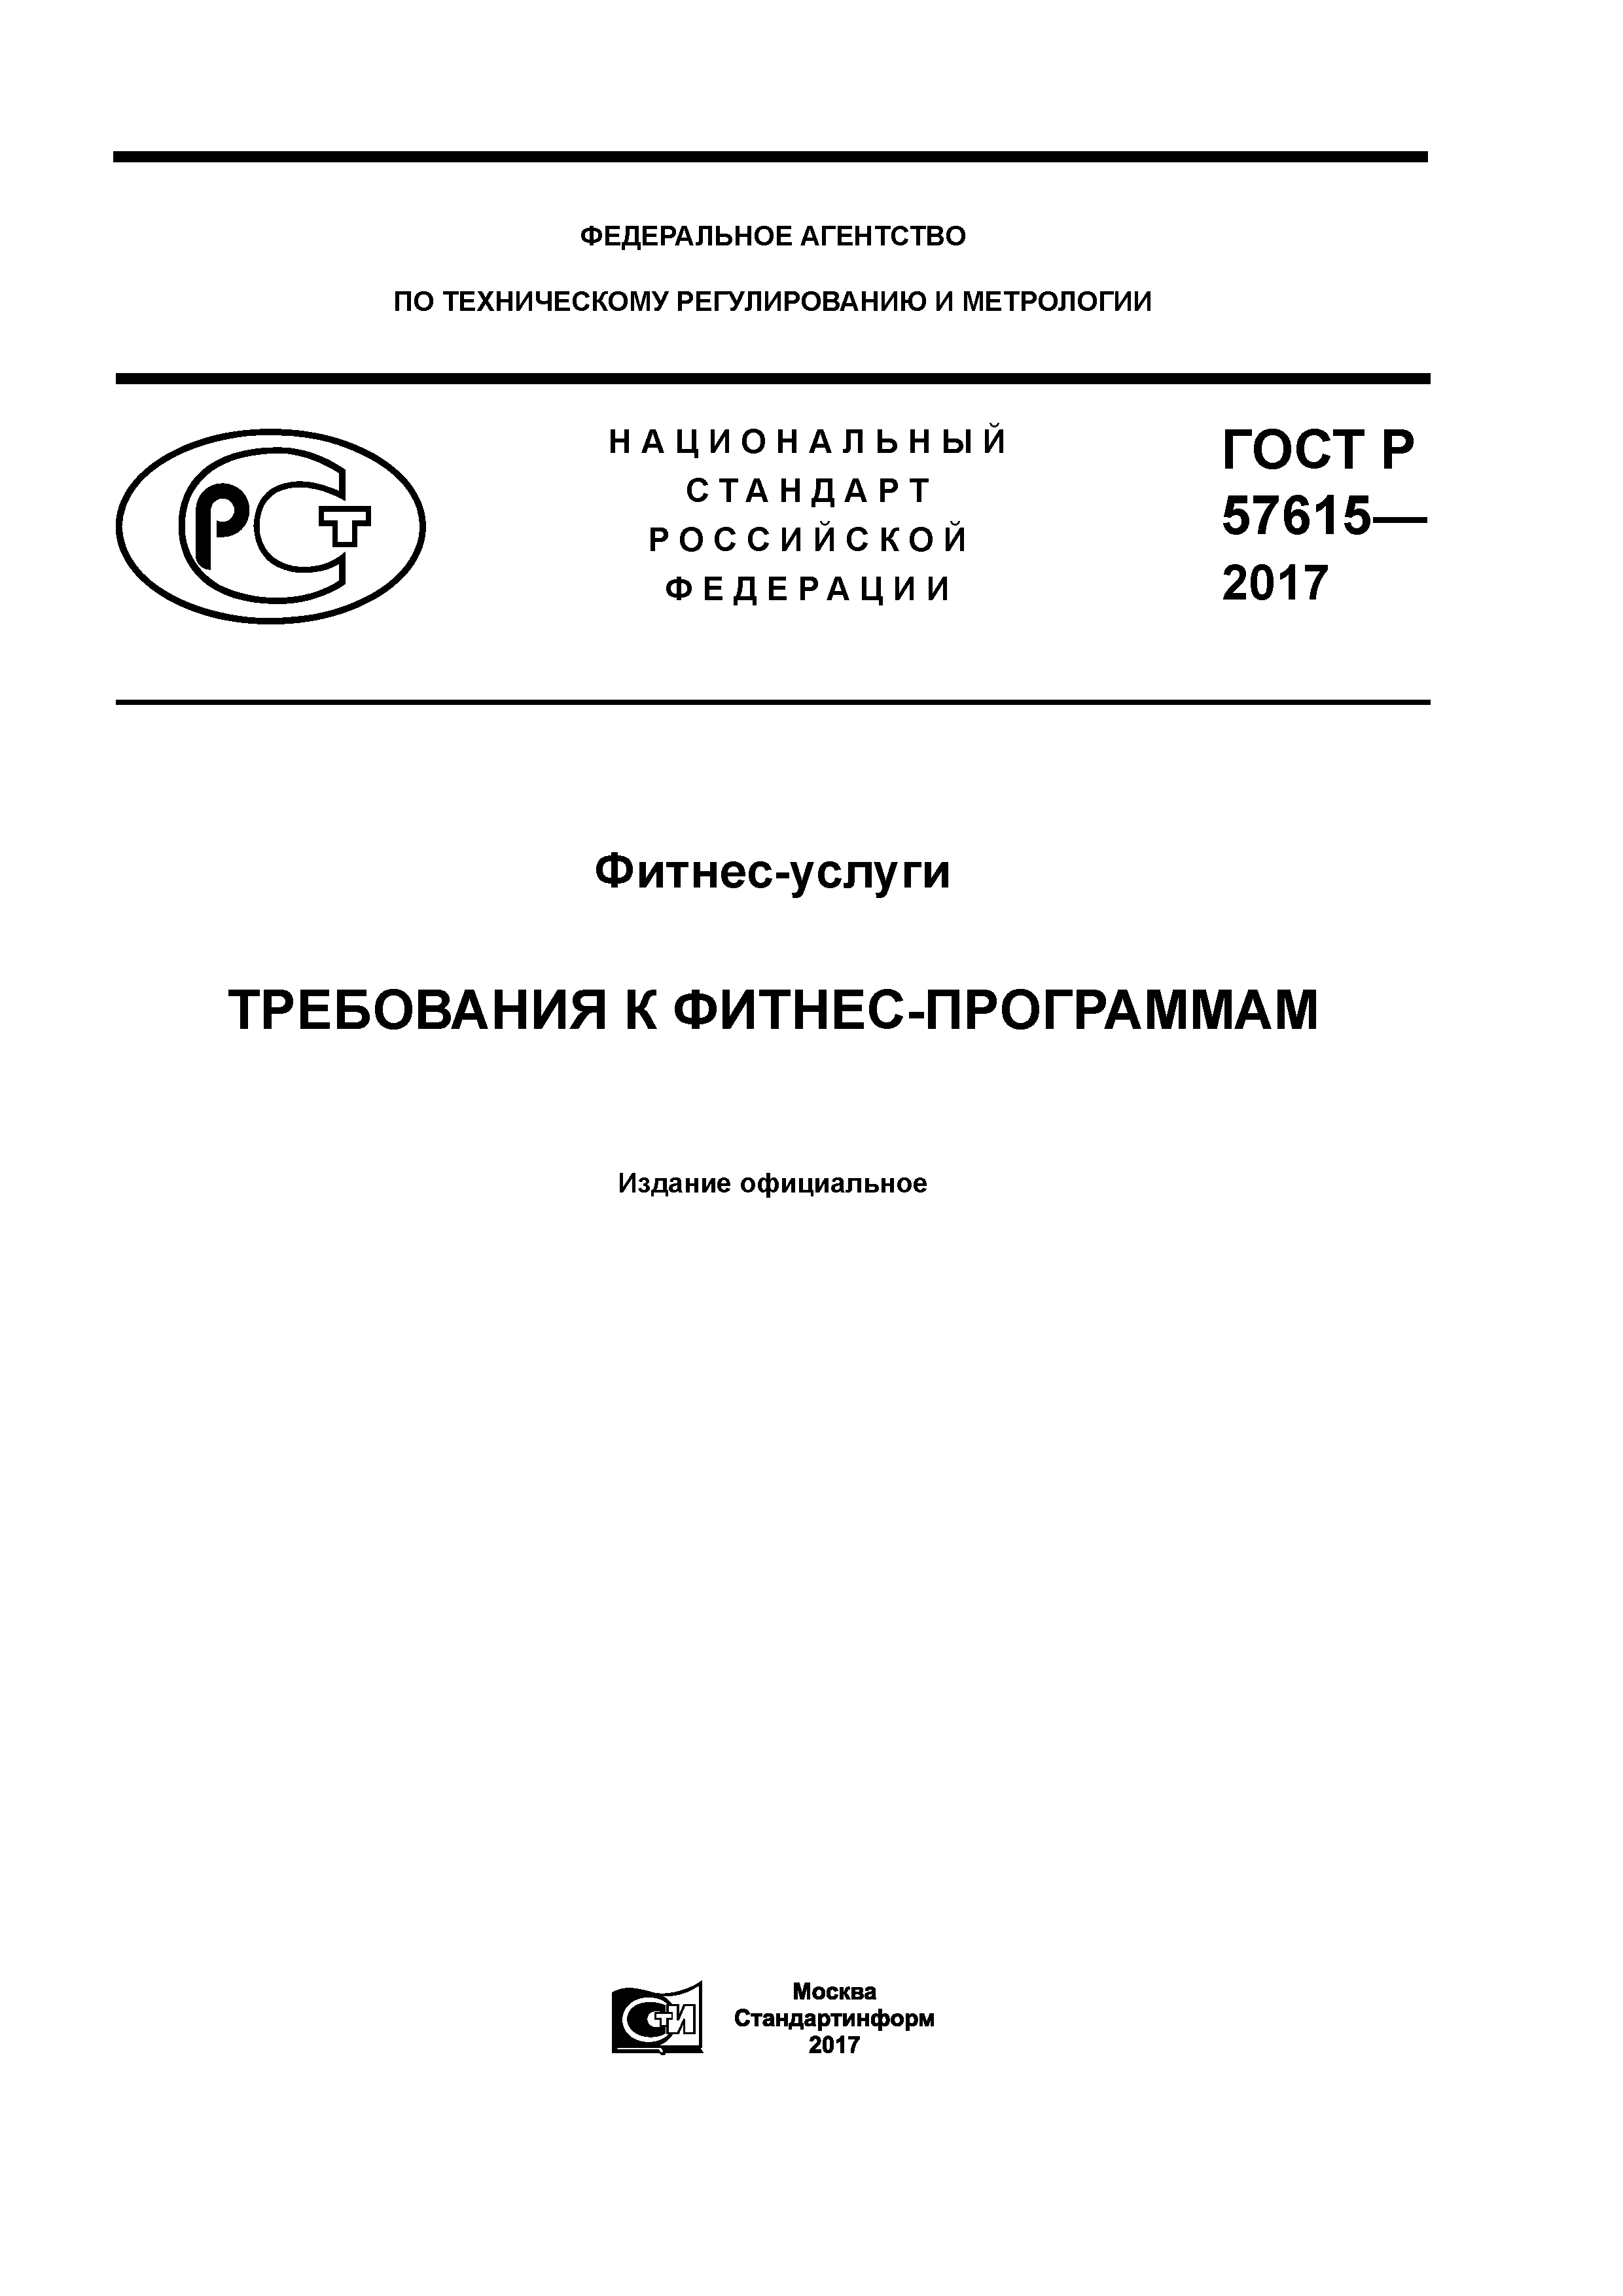 ГОСТ Р 57615-2017